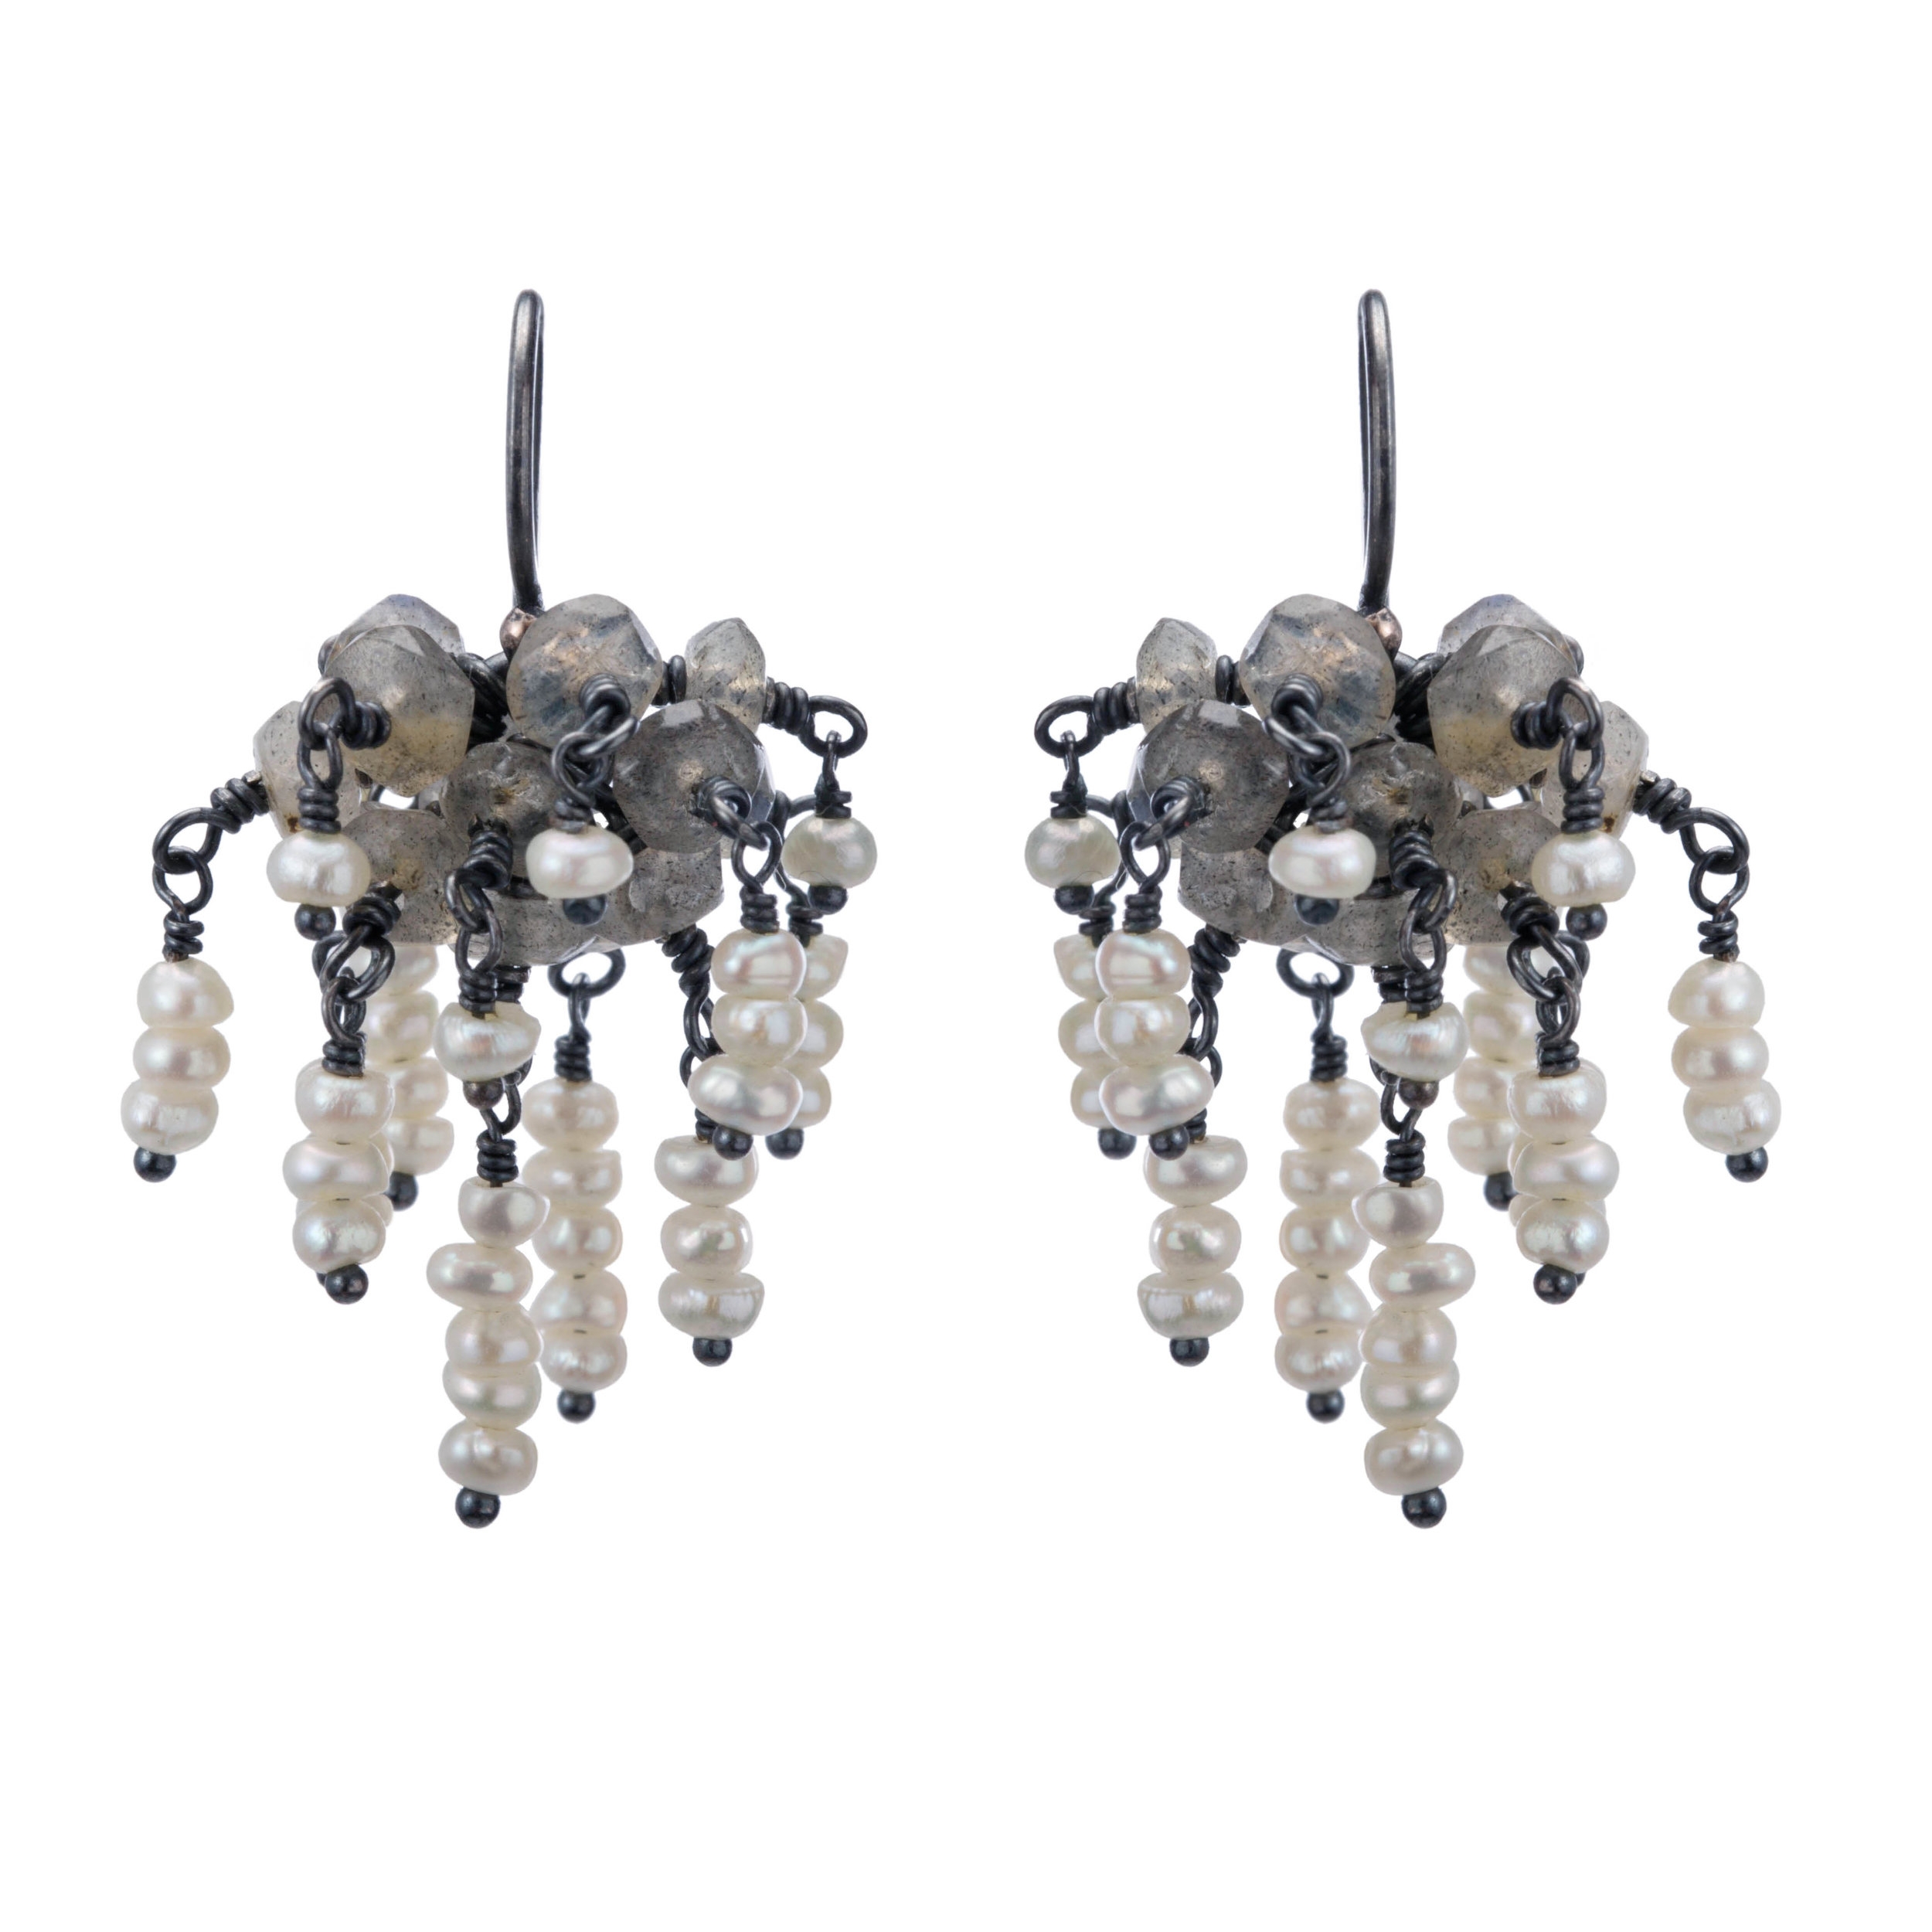 Undina Collection: Galena chandelier earrings